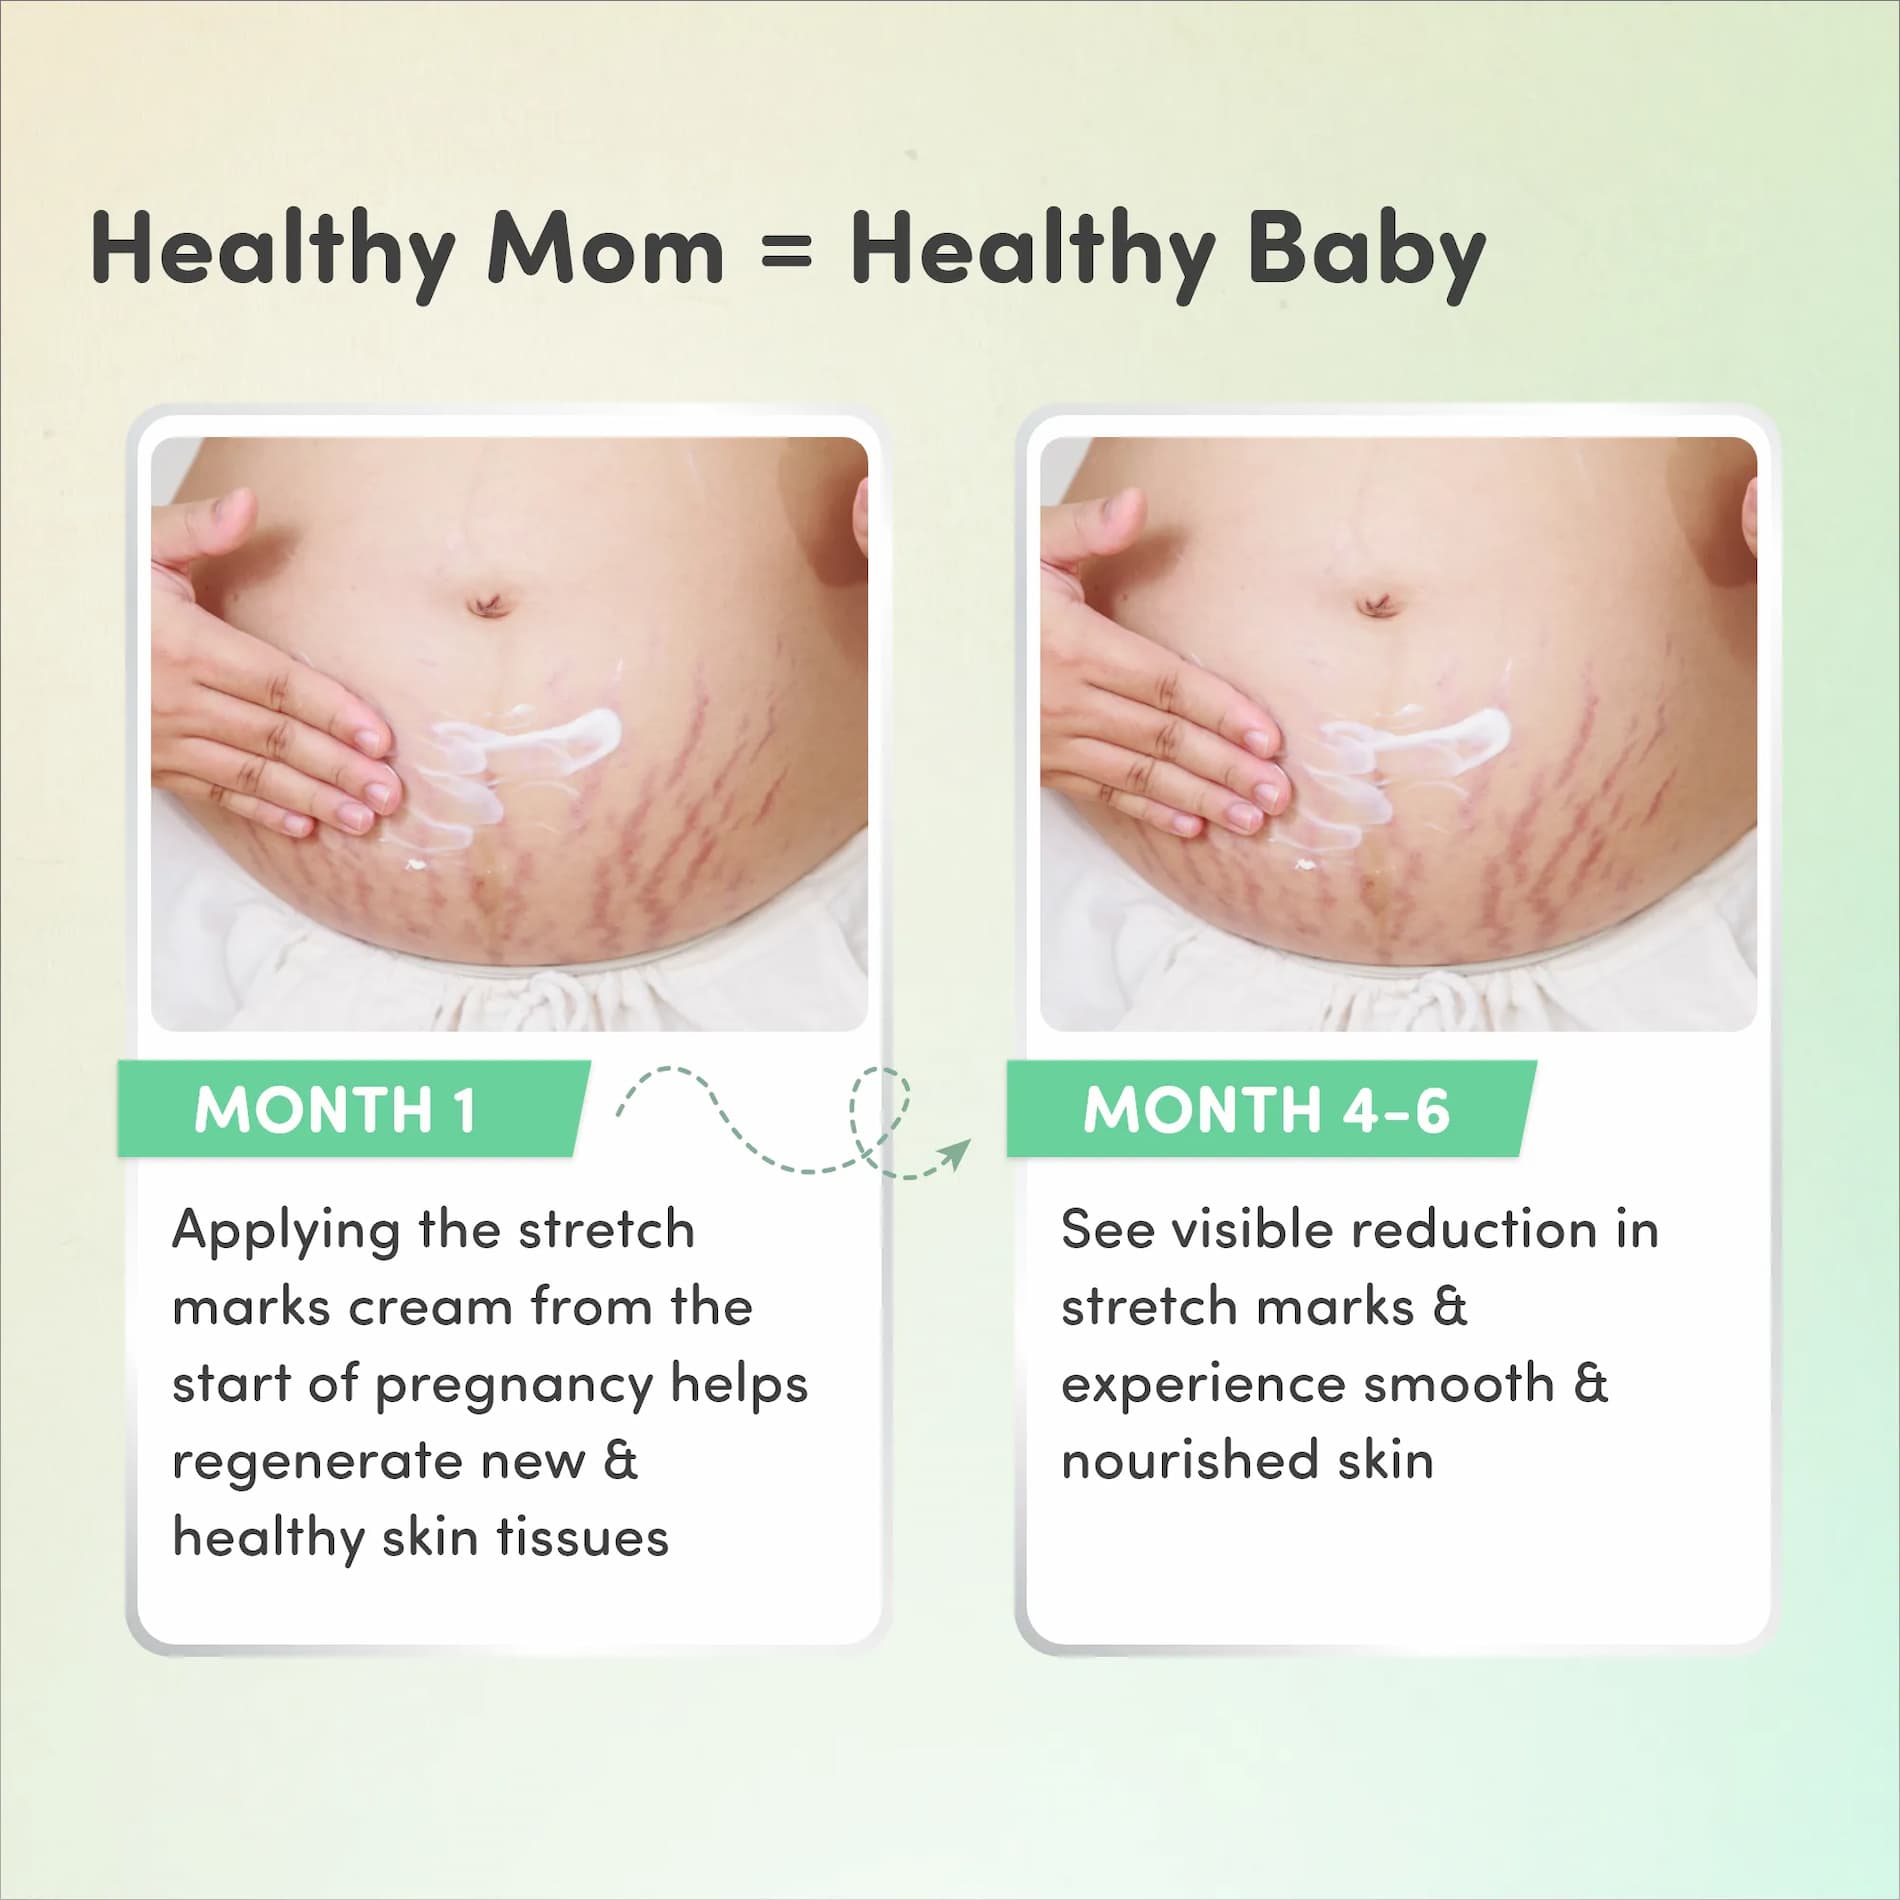 Pregnancy Wellness Super Saver Combo - Stretch Marks Cream for Women (100g) & Saffron for Pregnant Women (1g)